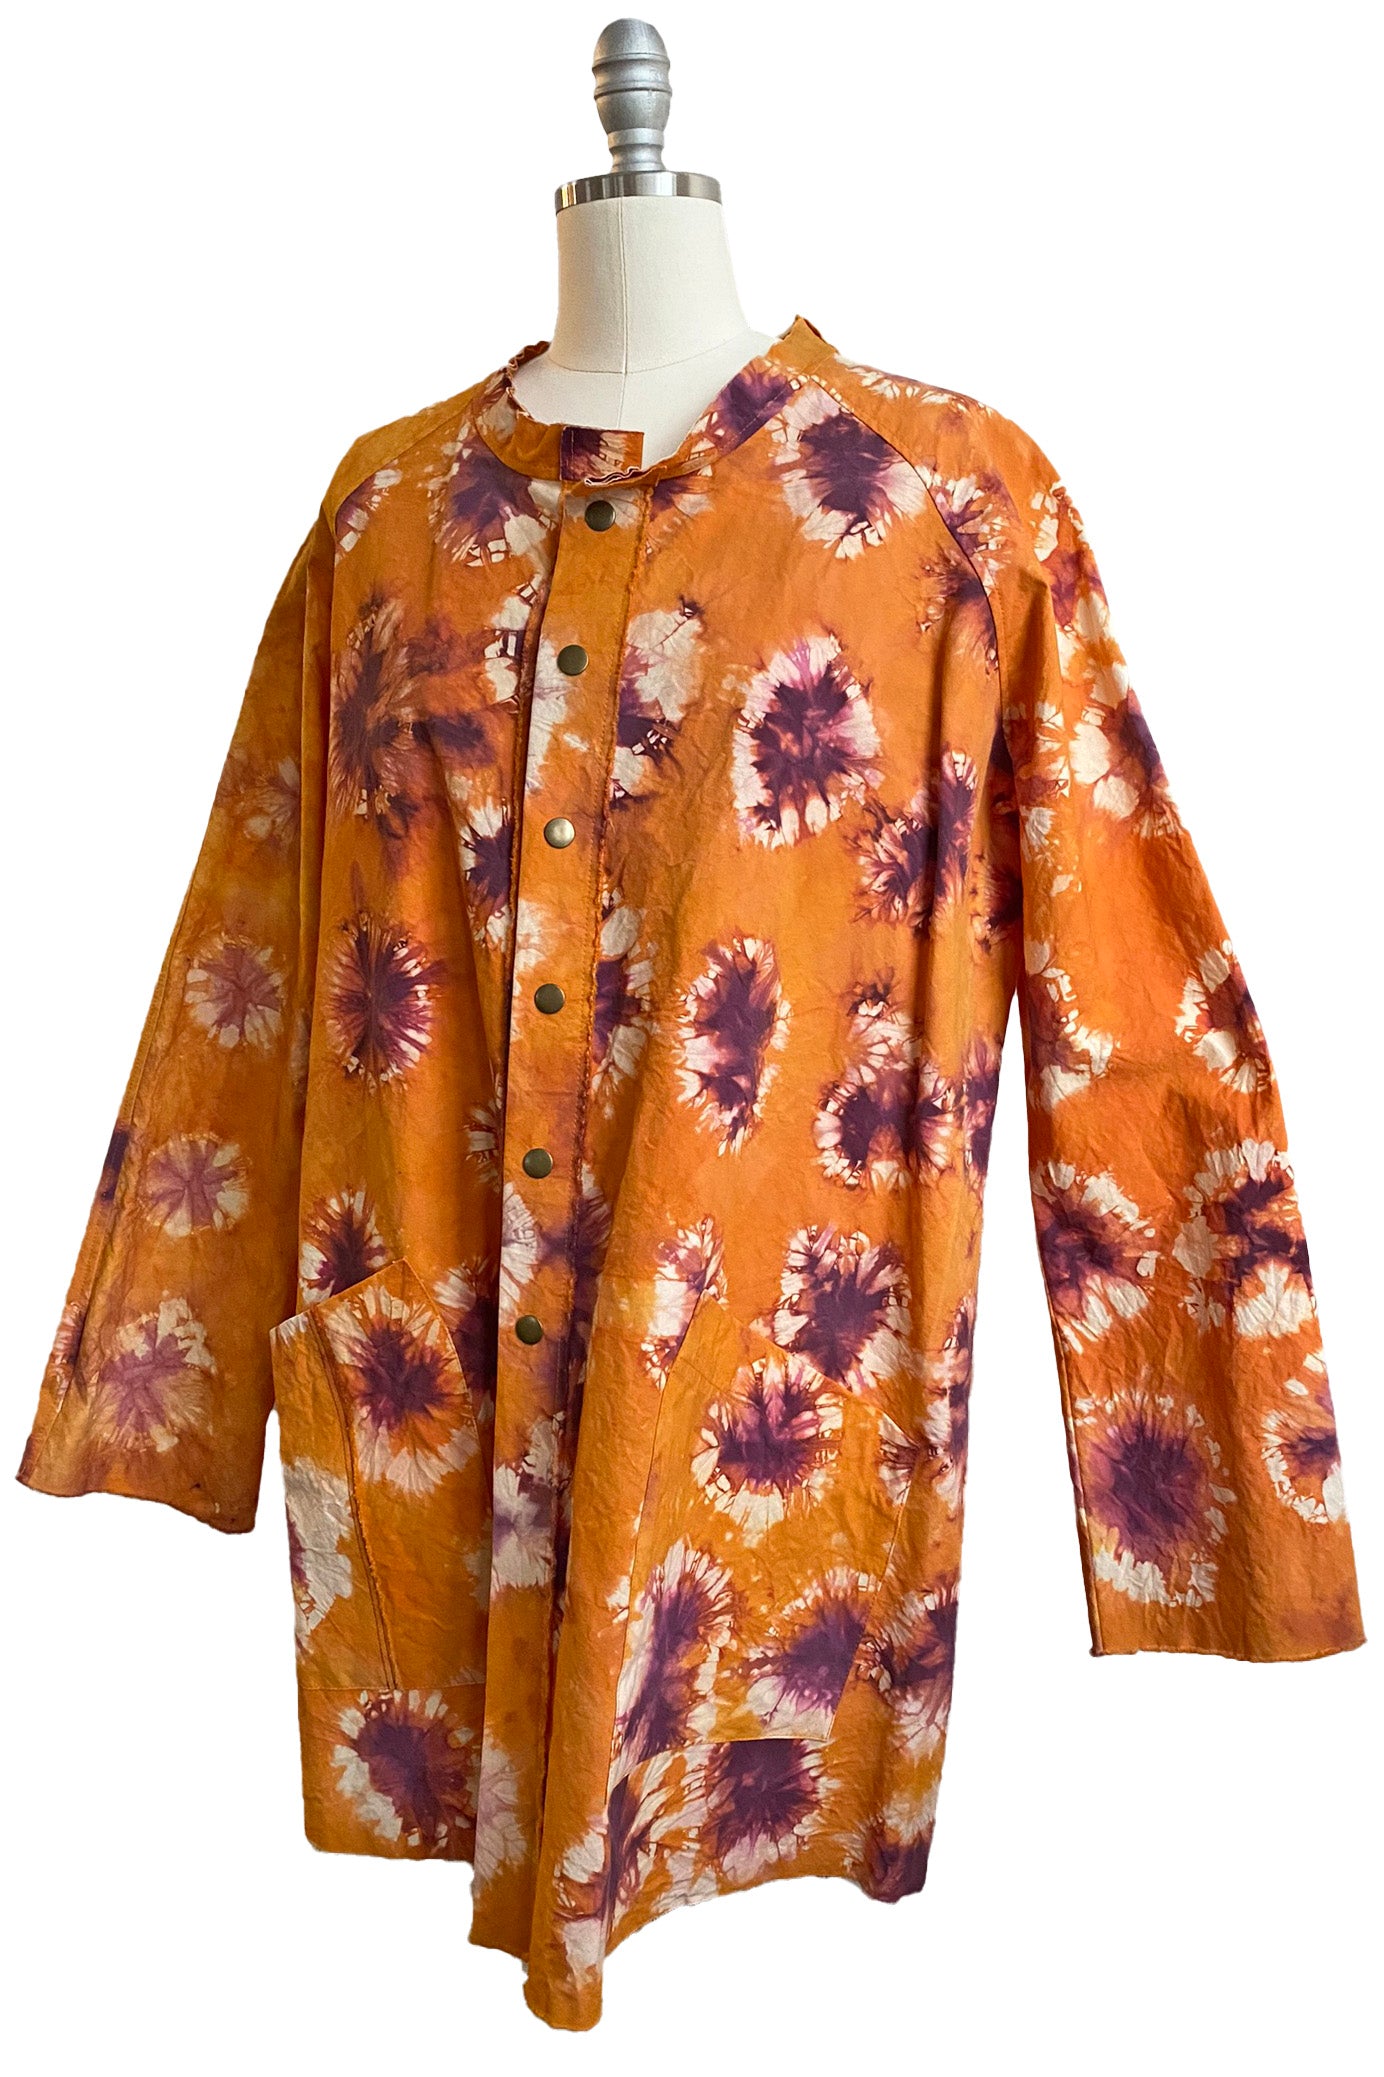 Juno Coat in Tie Dyed Canvas - Orange & Maroon - Medium